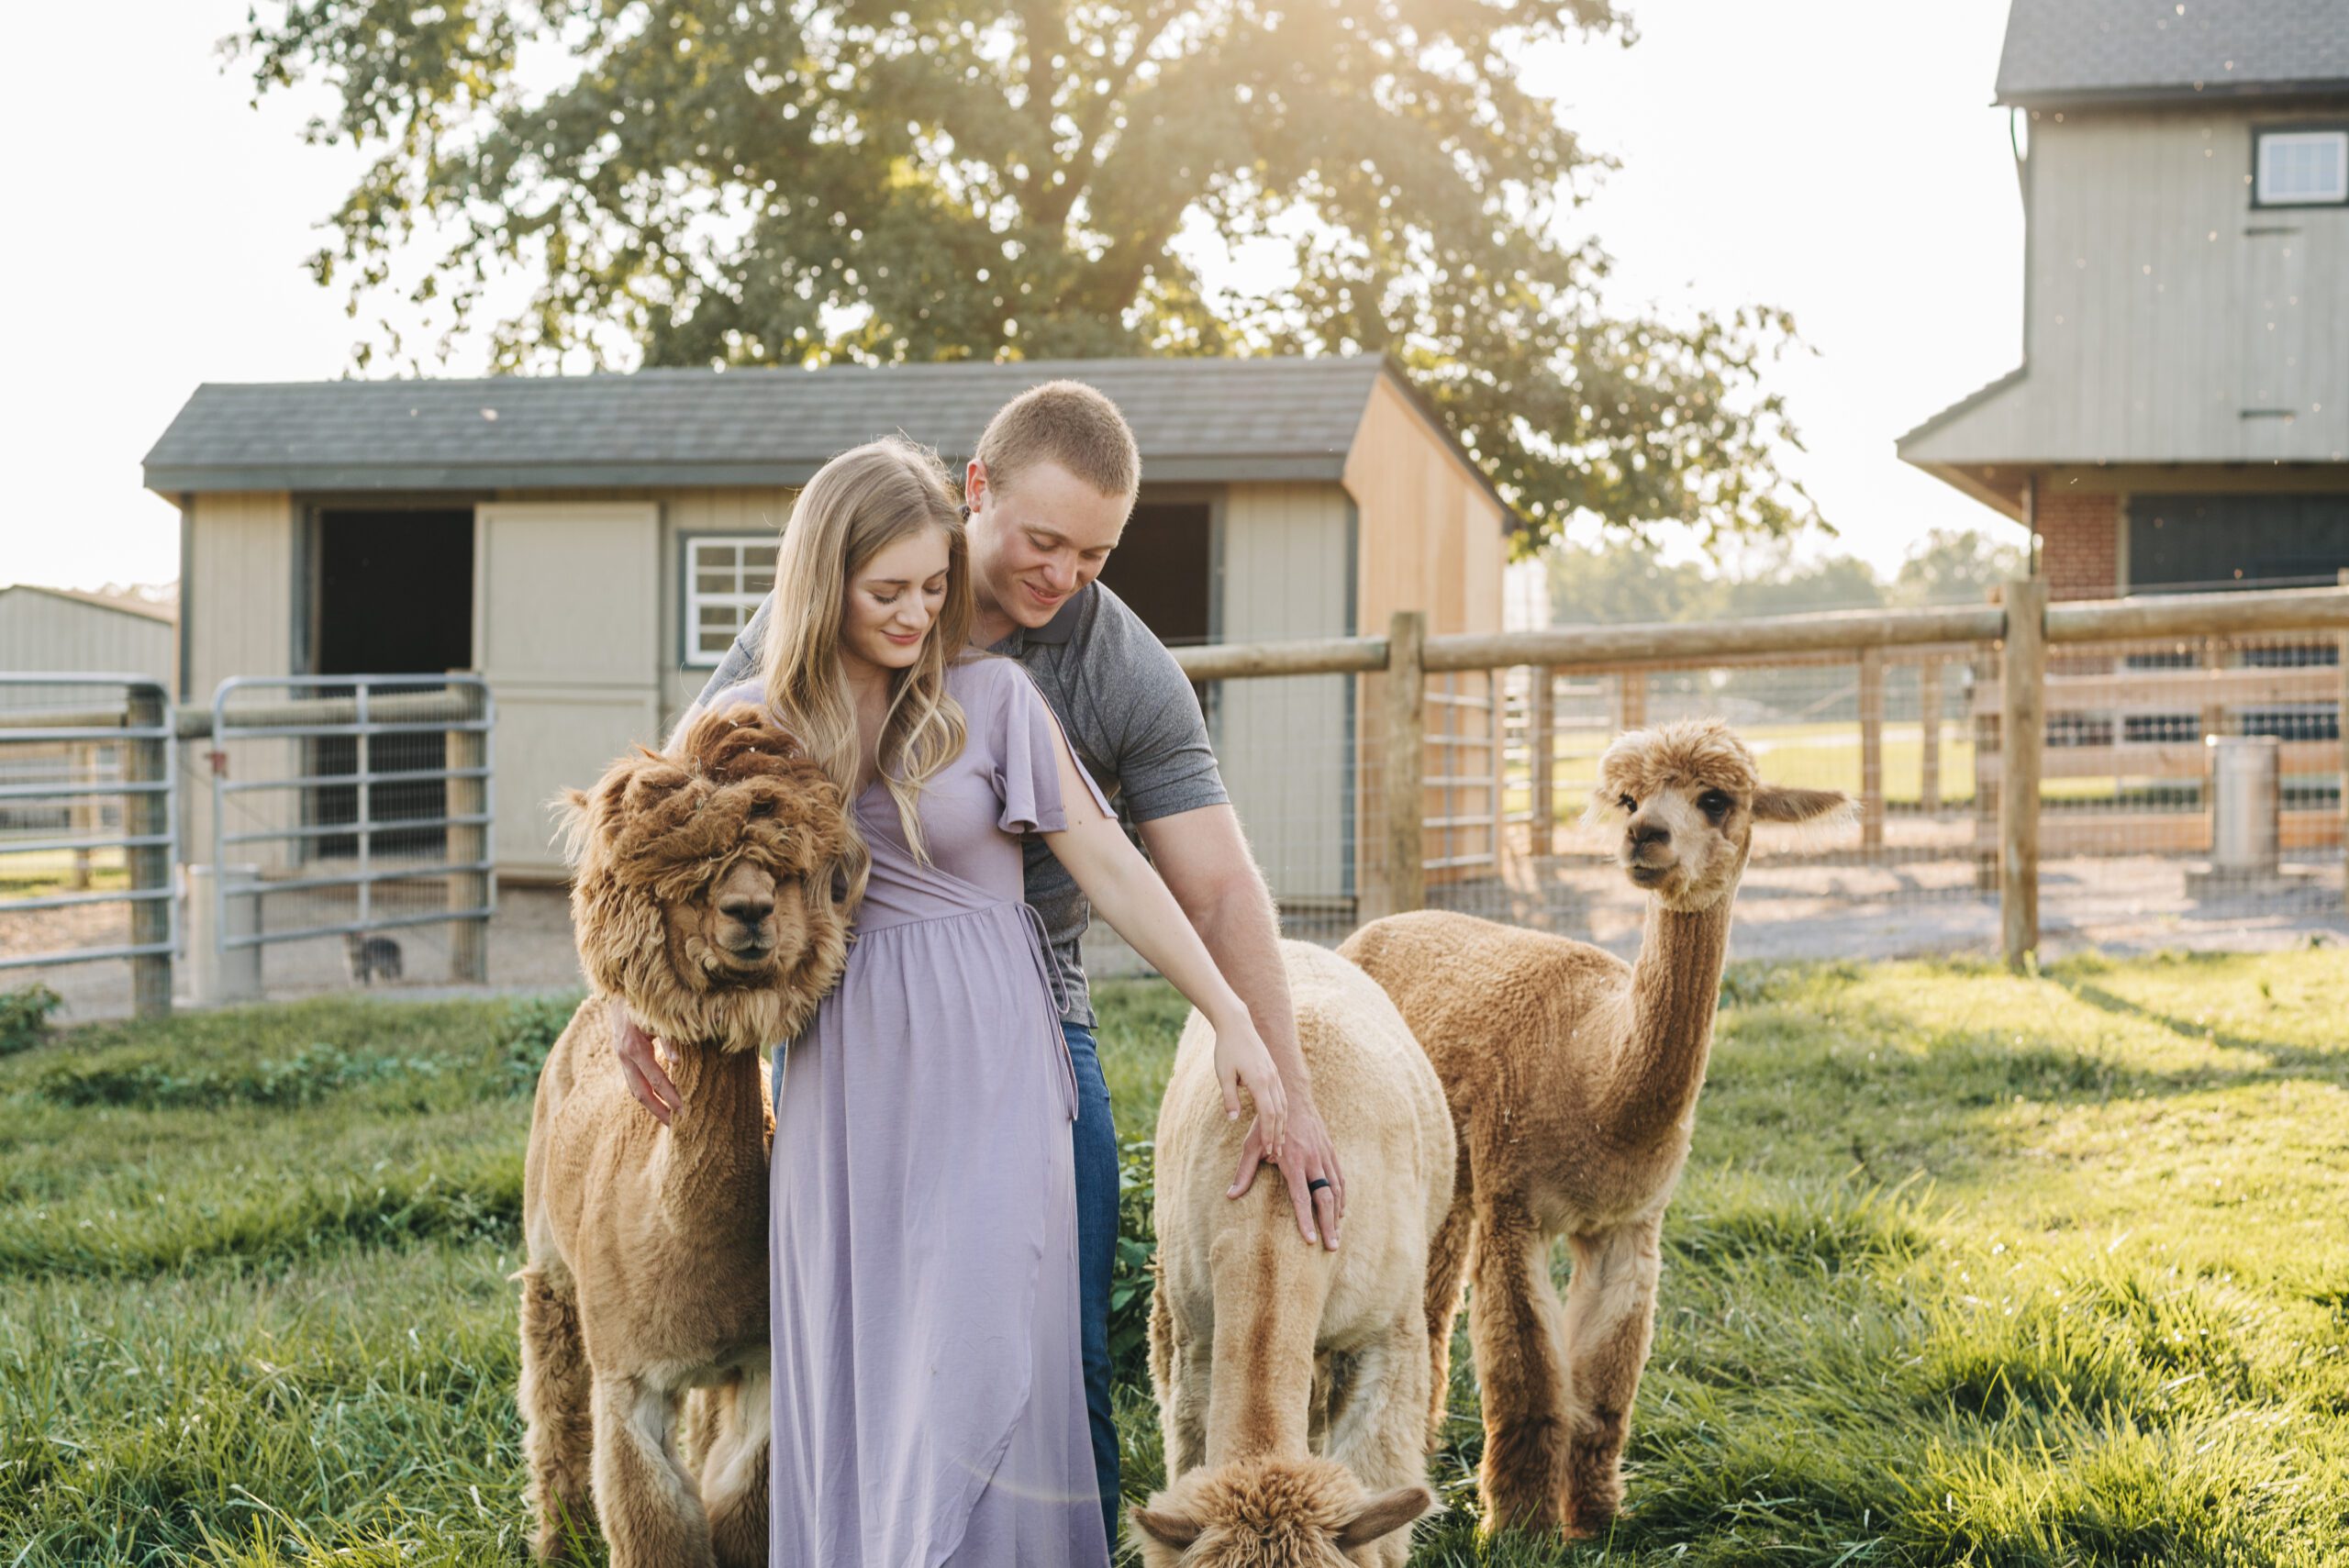 Cute couples photoshoot at an alpaca ranch